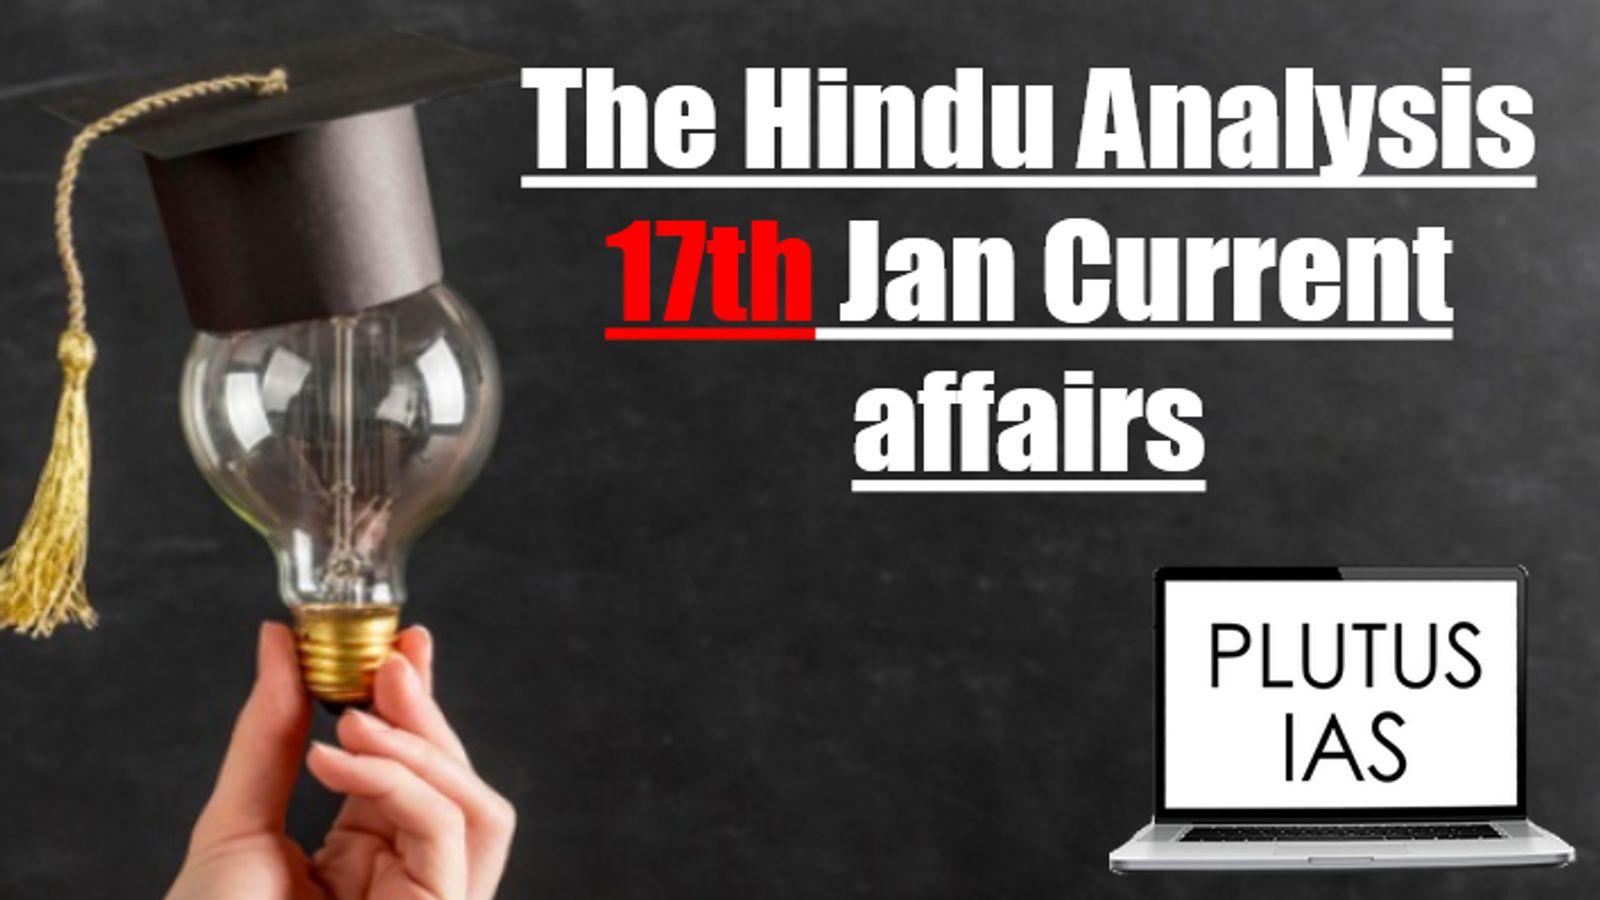 The Hindu Analysis 17th January